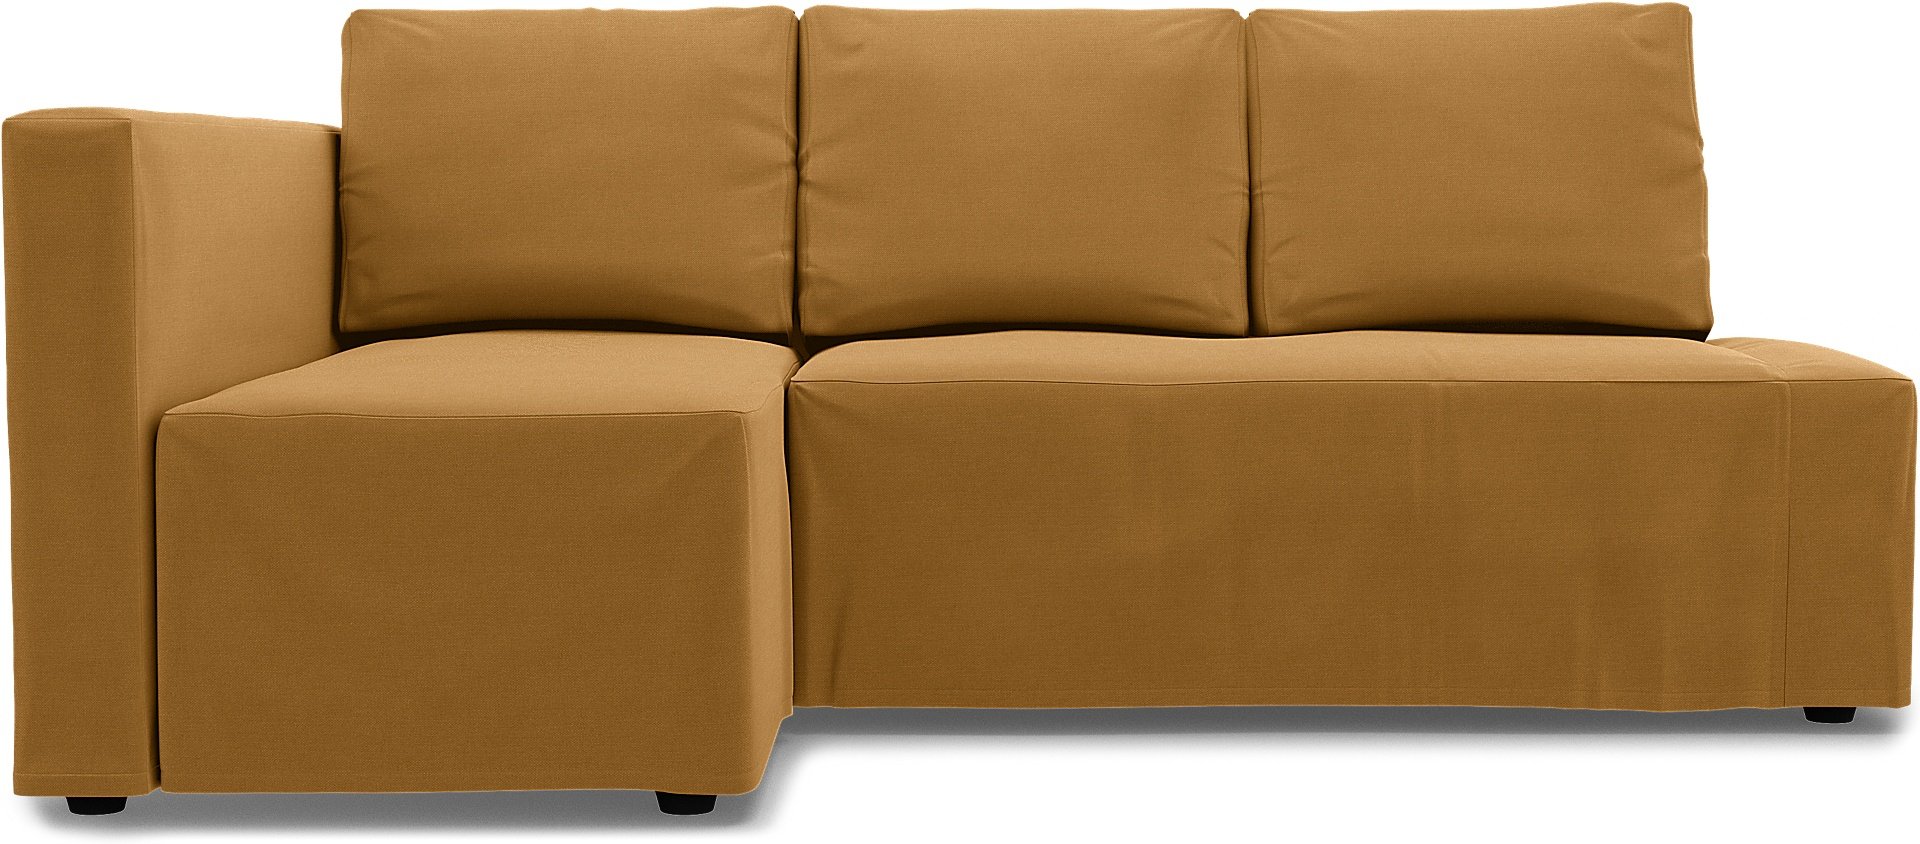 IKEA - Friheten Sofa Bed with Left Chaise Cover, Mustard, Linen - Bemz